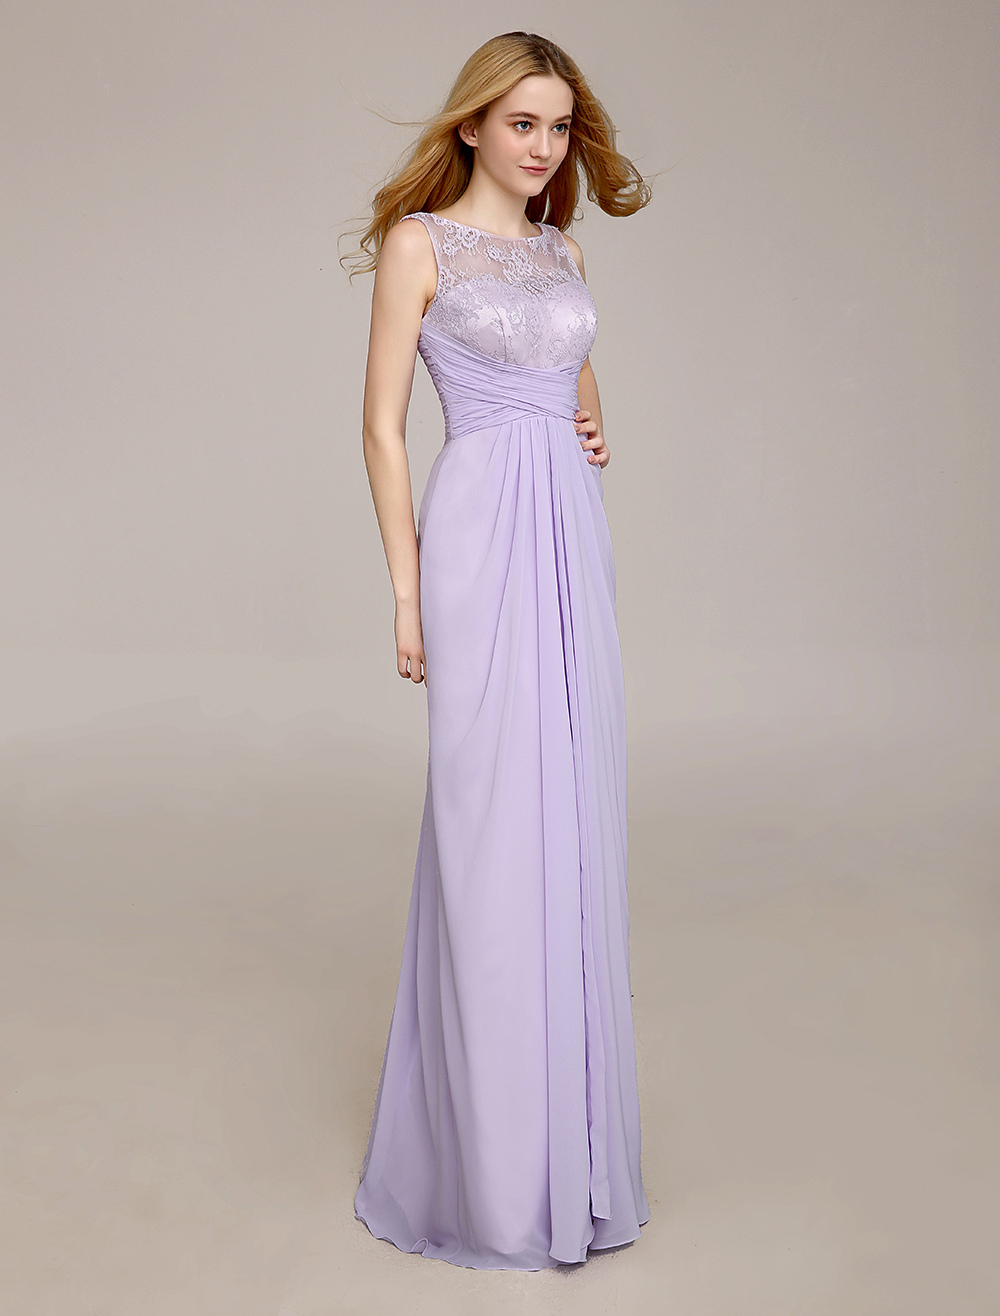 Jewel Neck Bridesmaid Dress With Draped Sheath Milanoo - Milanoo.com